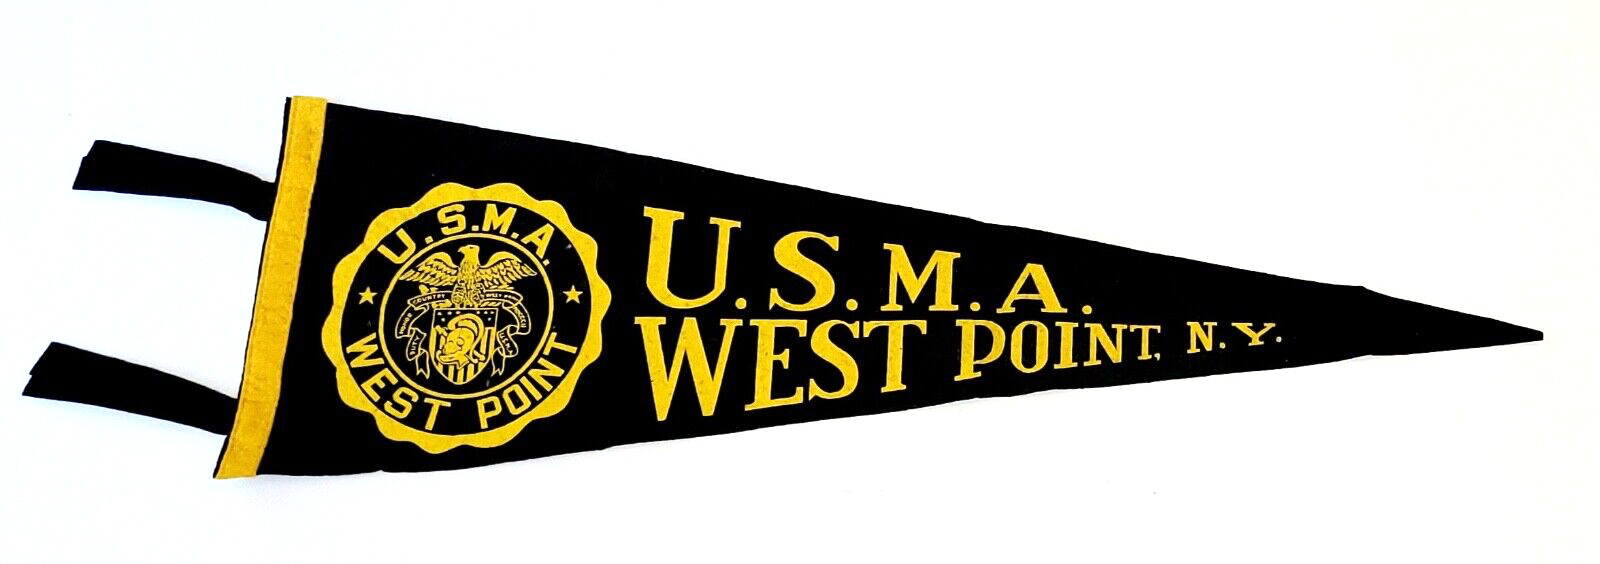 Vintage U.S.M.A. West Point NY Felt Pennant Flag 